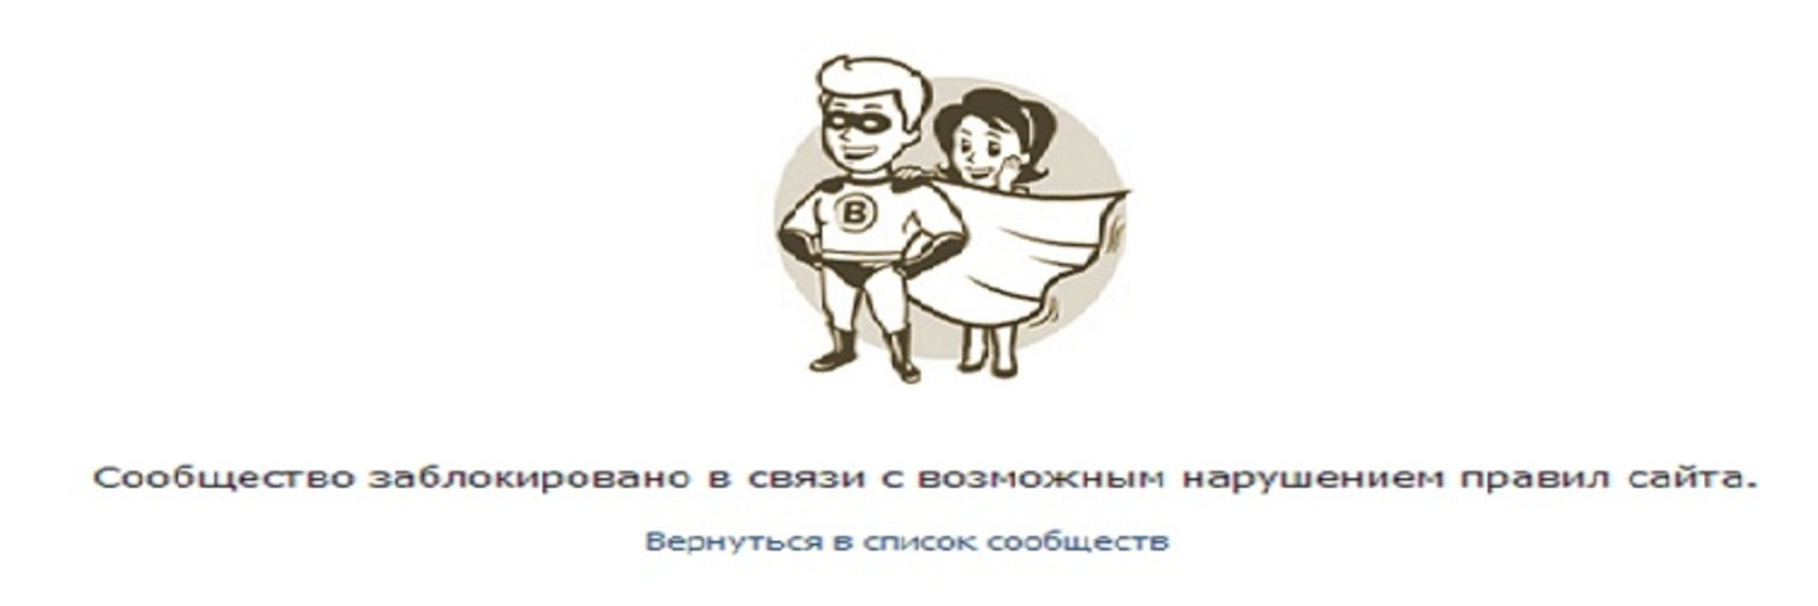 Cab mdx39 ru pa web. Страница заблокирована. Заблокировать. Пользователь заблокирован. Страница заблокирована за нарушение правил сайта.